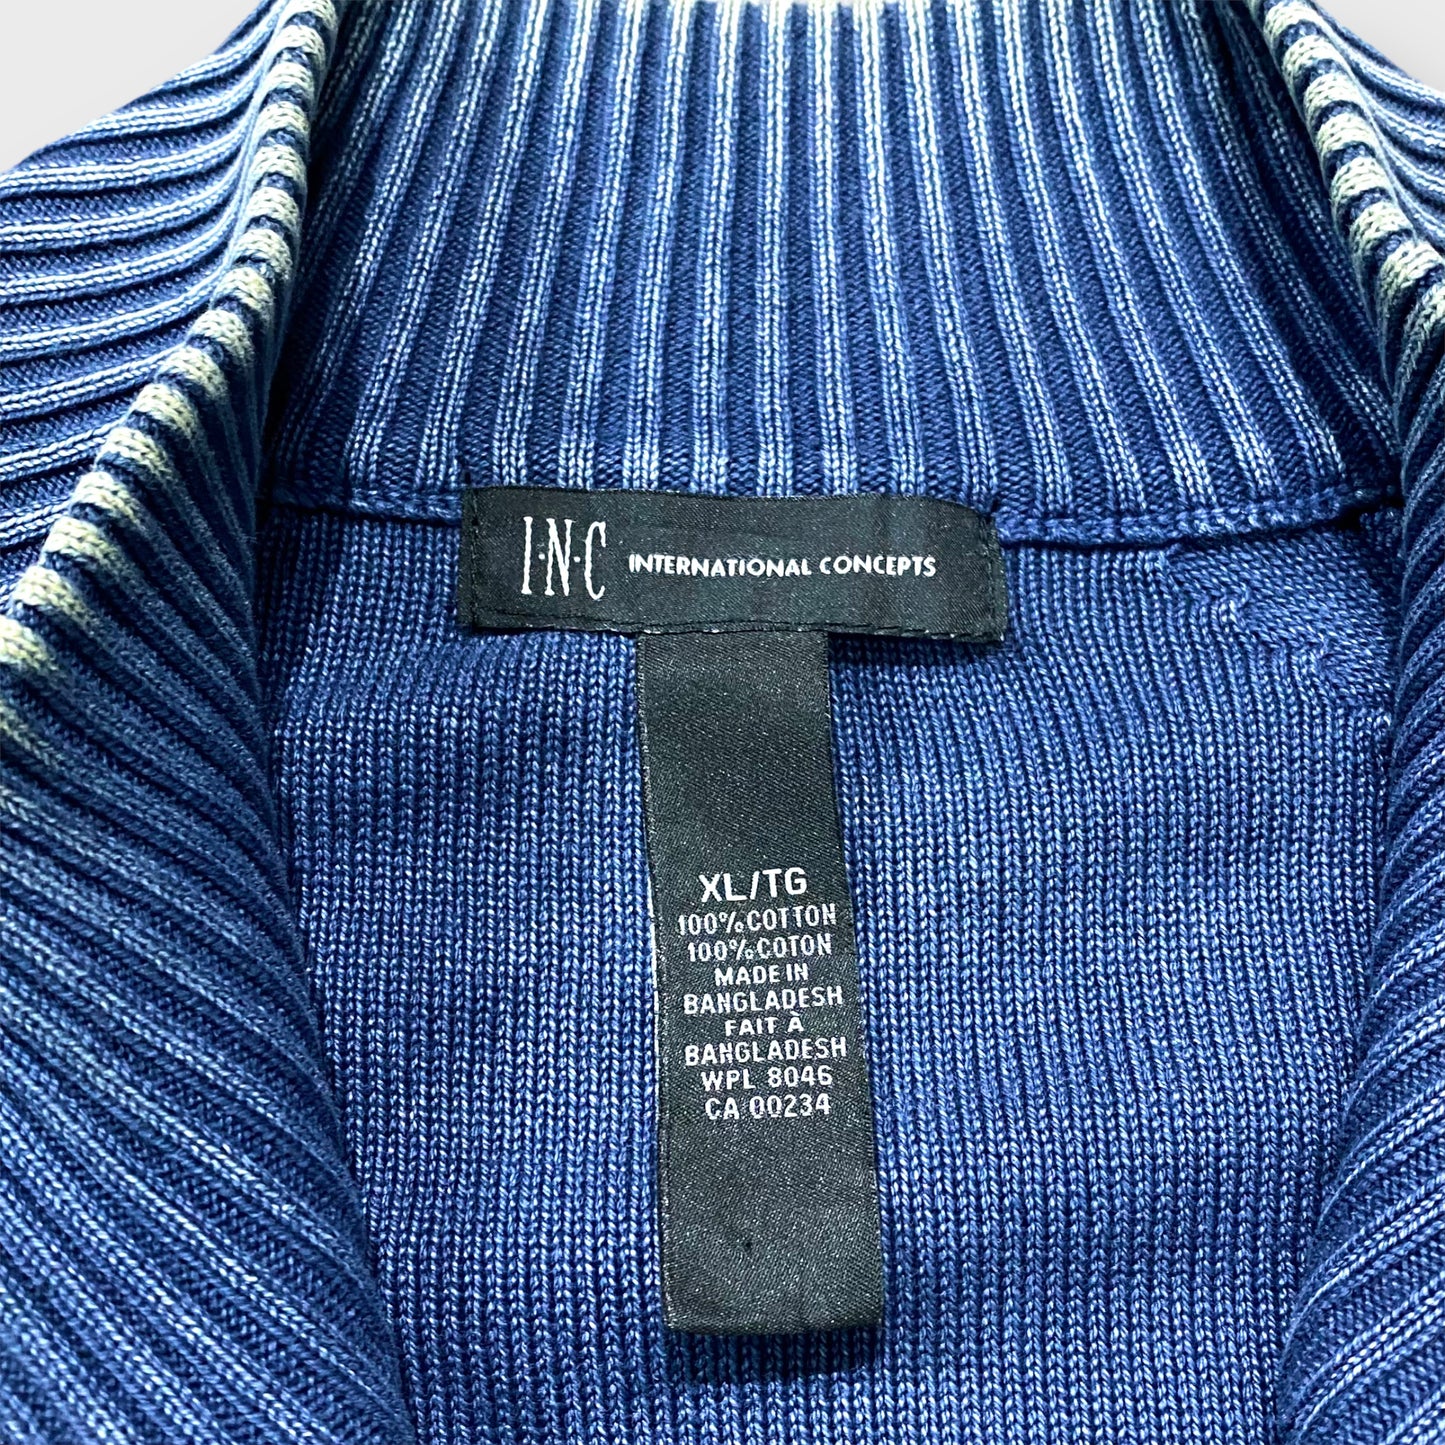 Full zip high-neck knit jacket